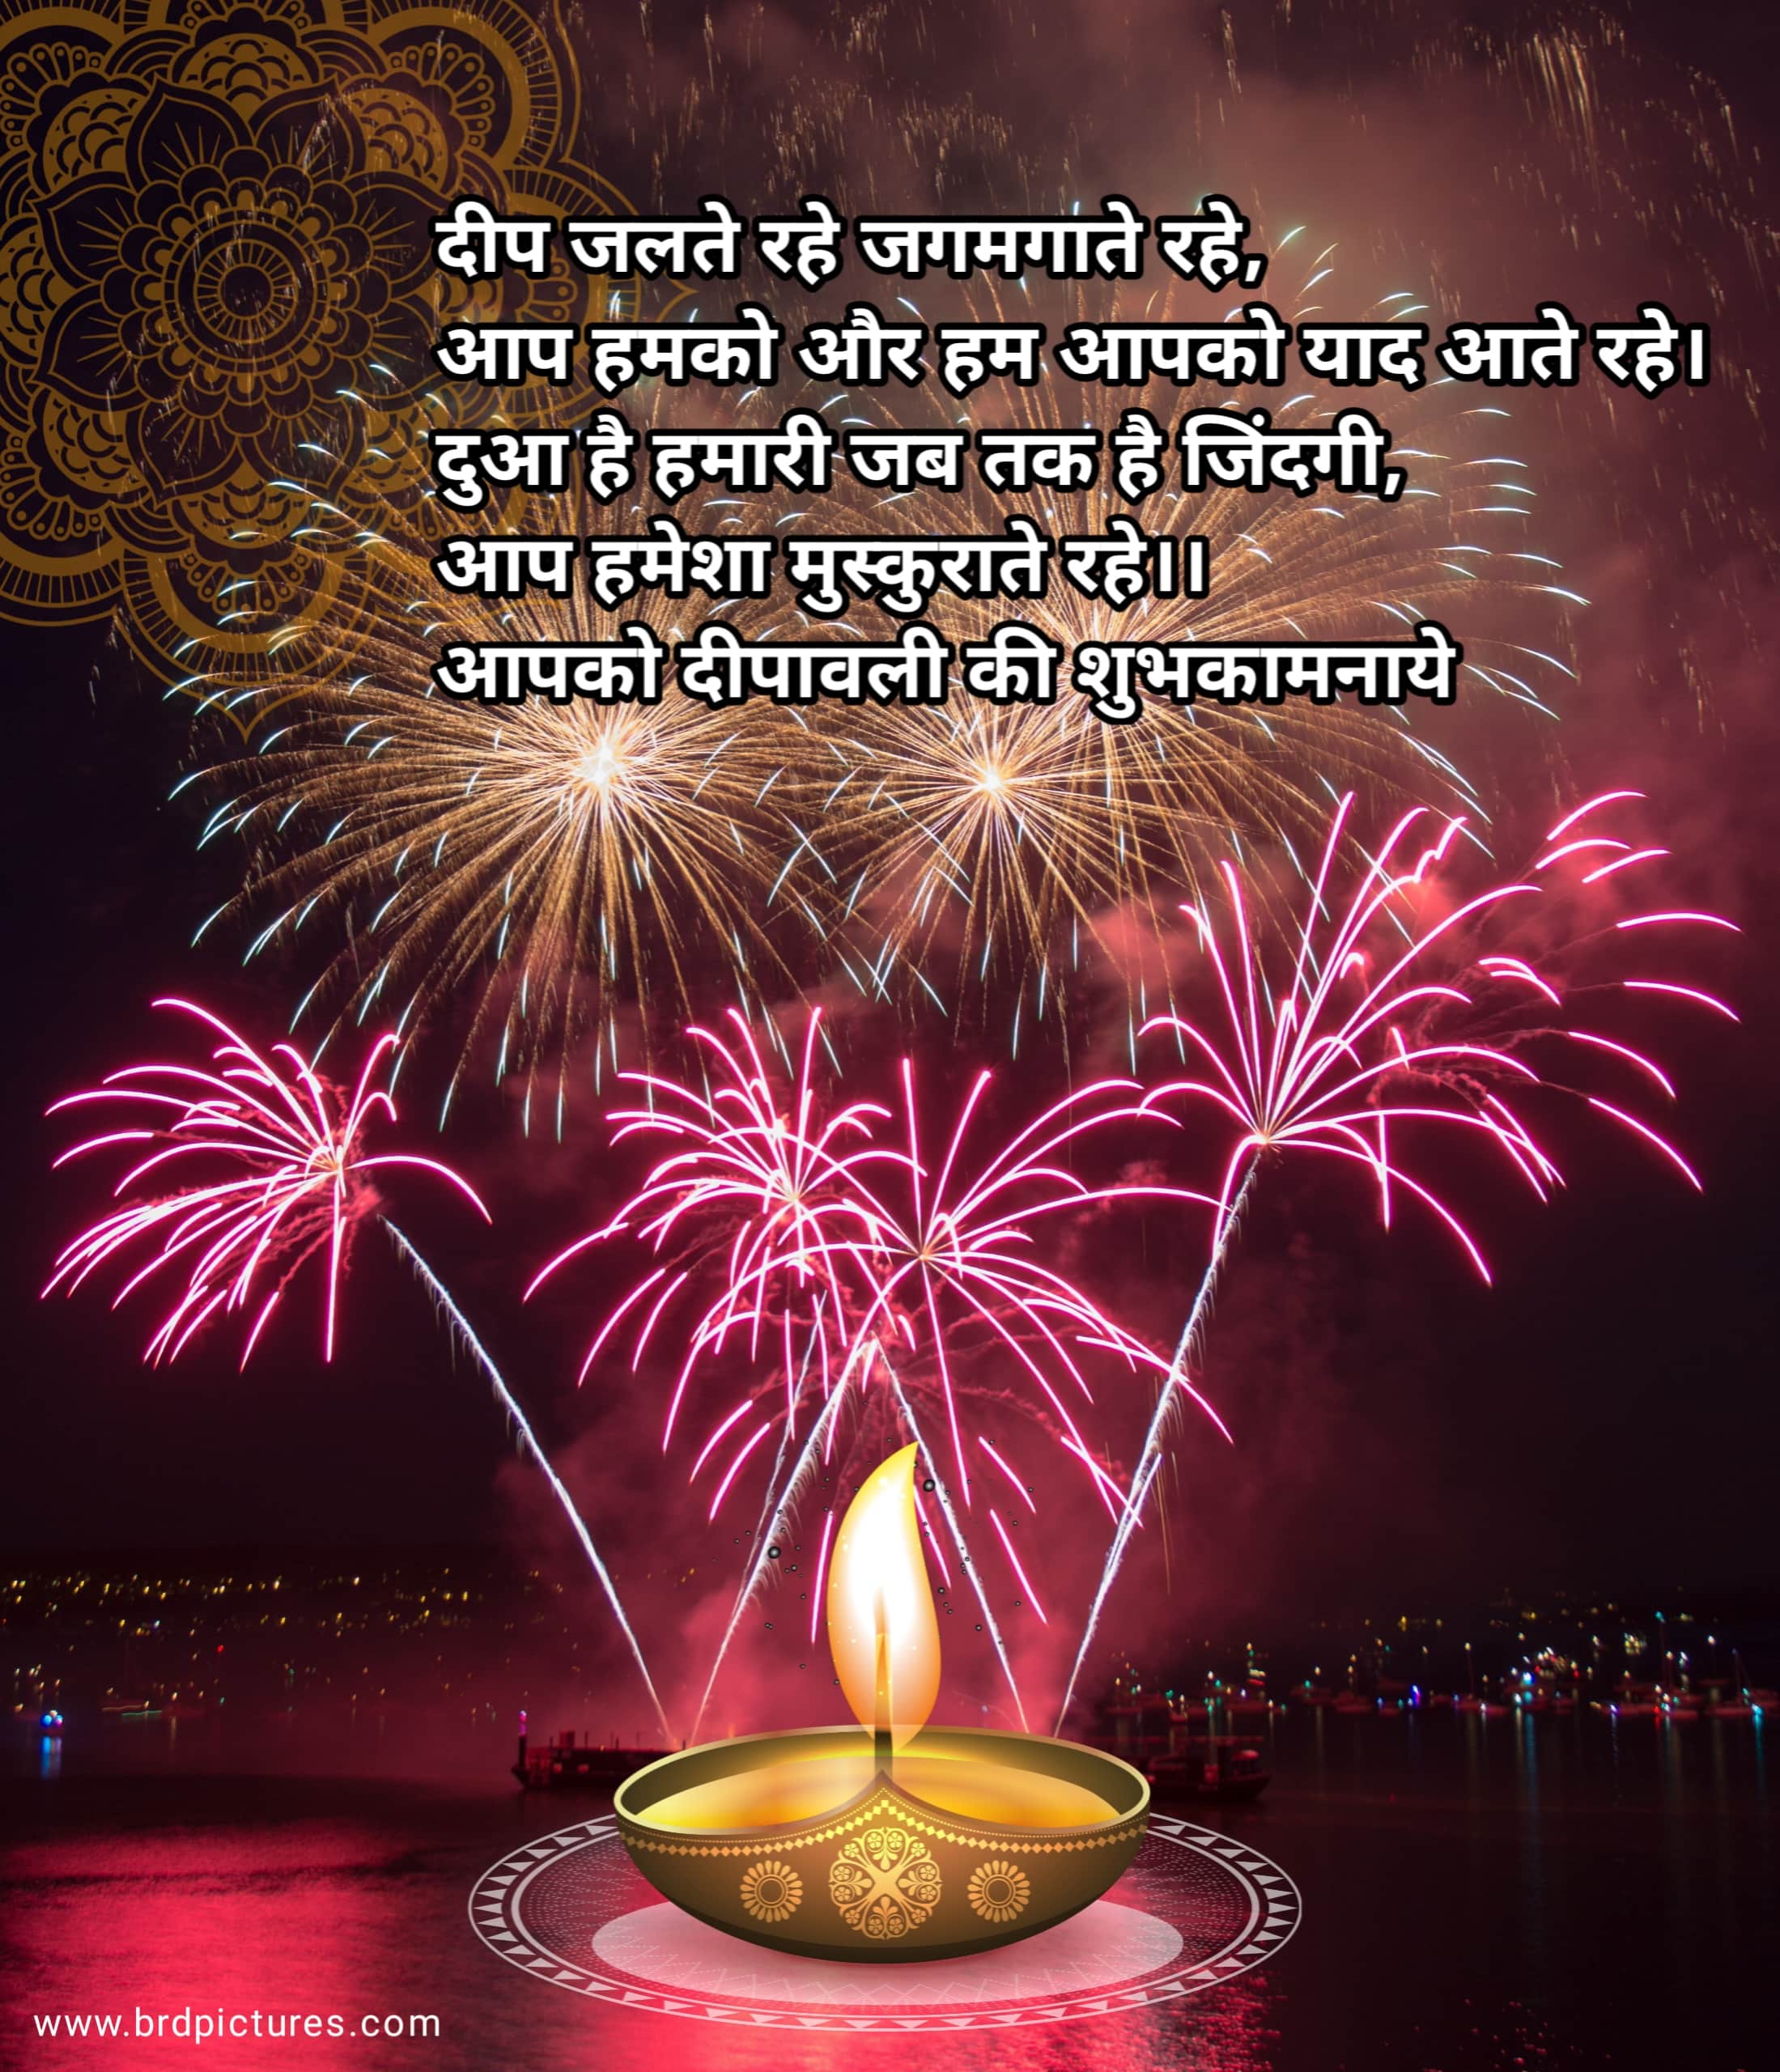 Diwali Wishes Wallpaper Image Free Download 